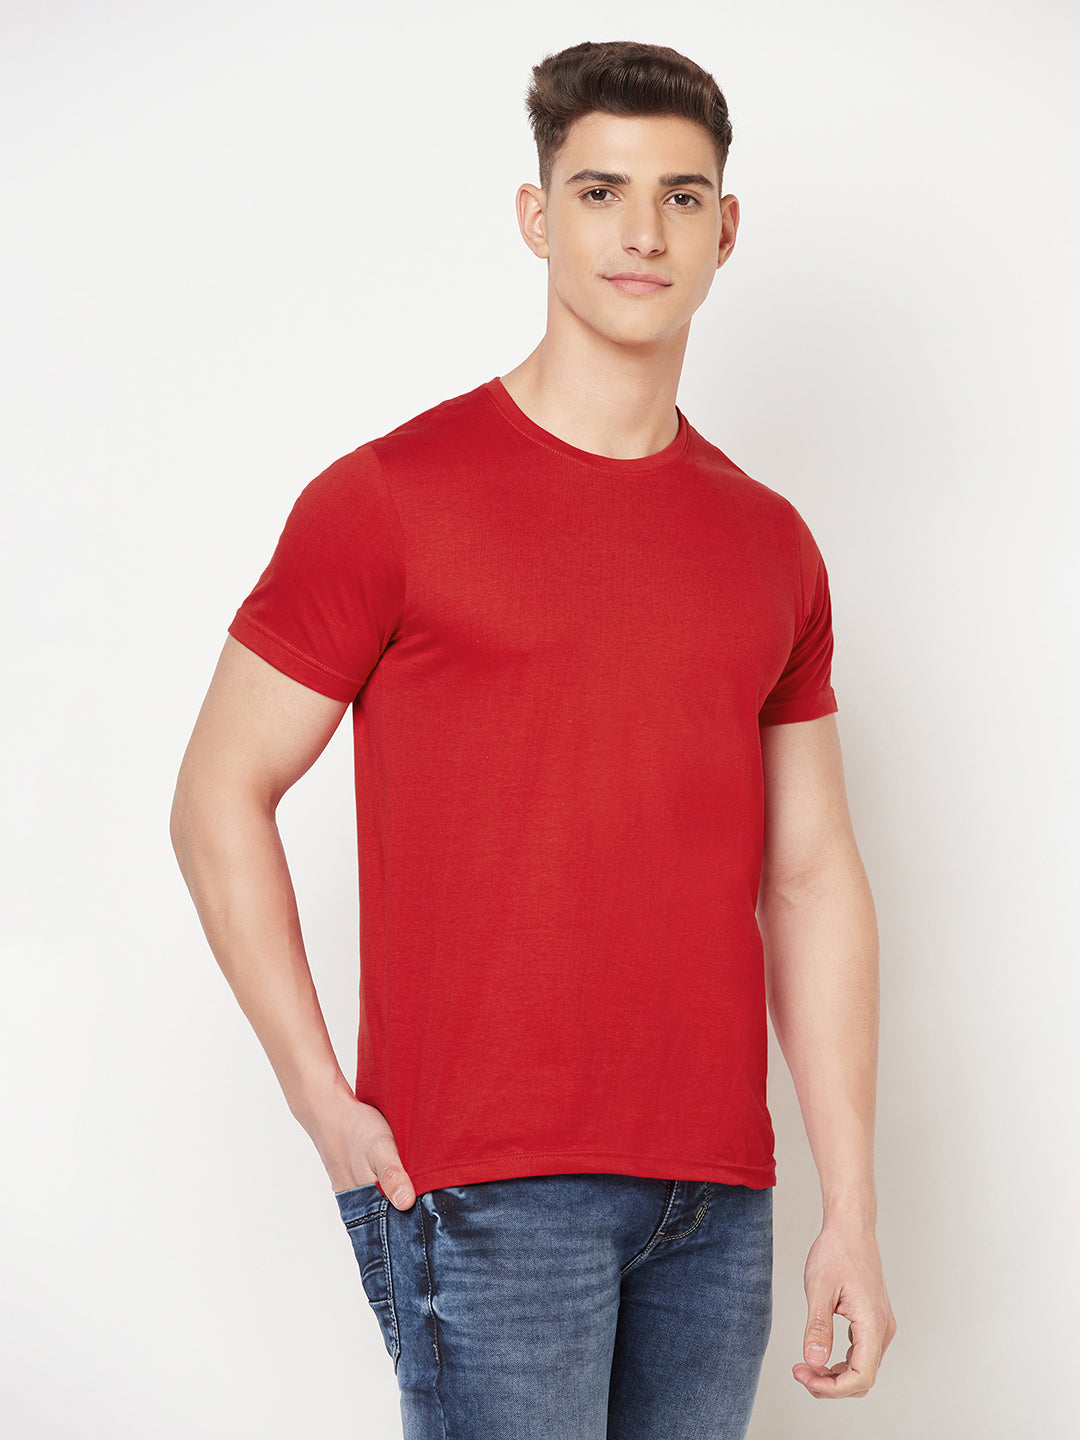 Premium Cotton Tshirts  (Pack of 2- Black,Red)